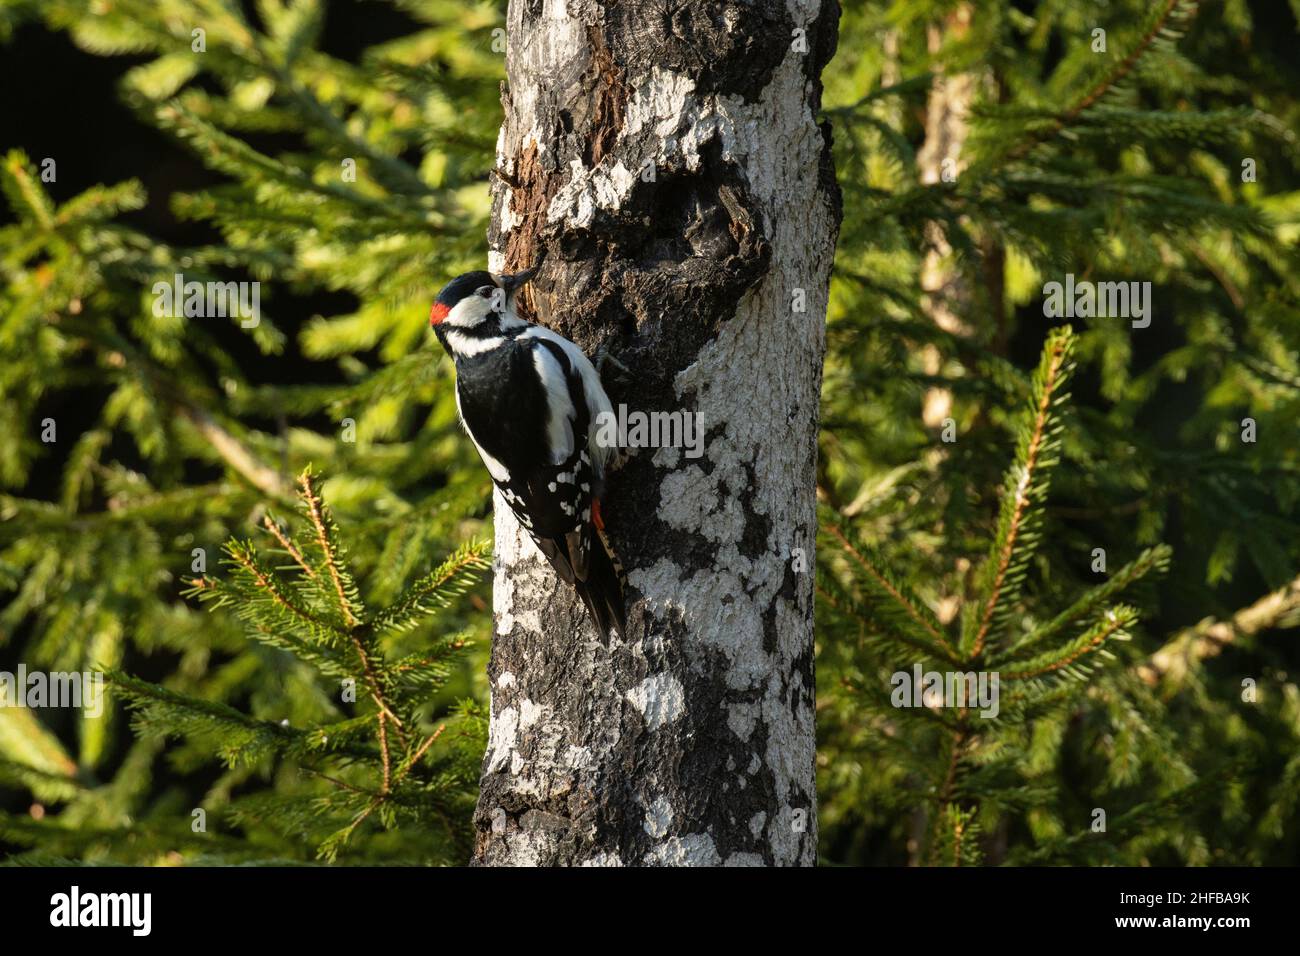 Gran pájaro carpintero moteado, Dendrocopos mayor en un tronco de árbol de Aspen en un bosque boreal. Foto de stock